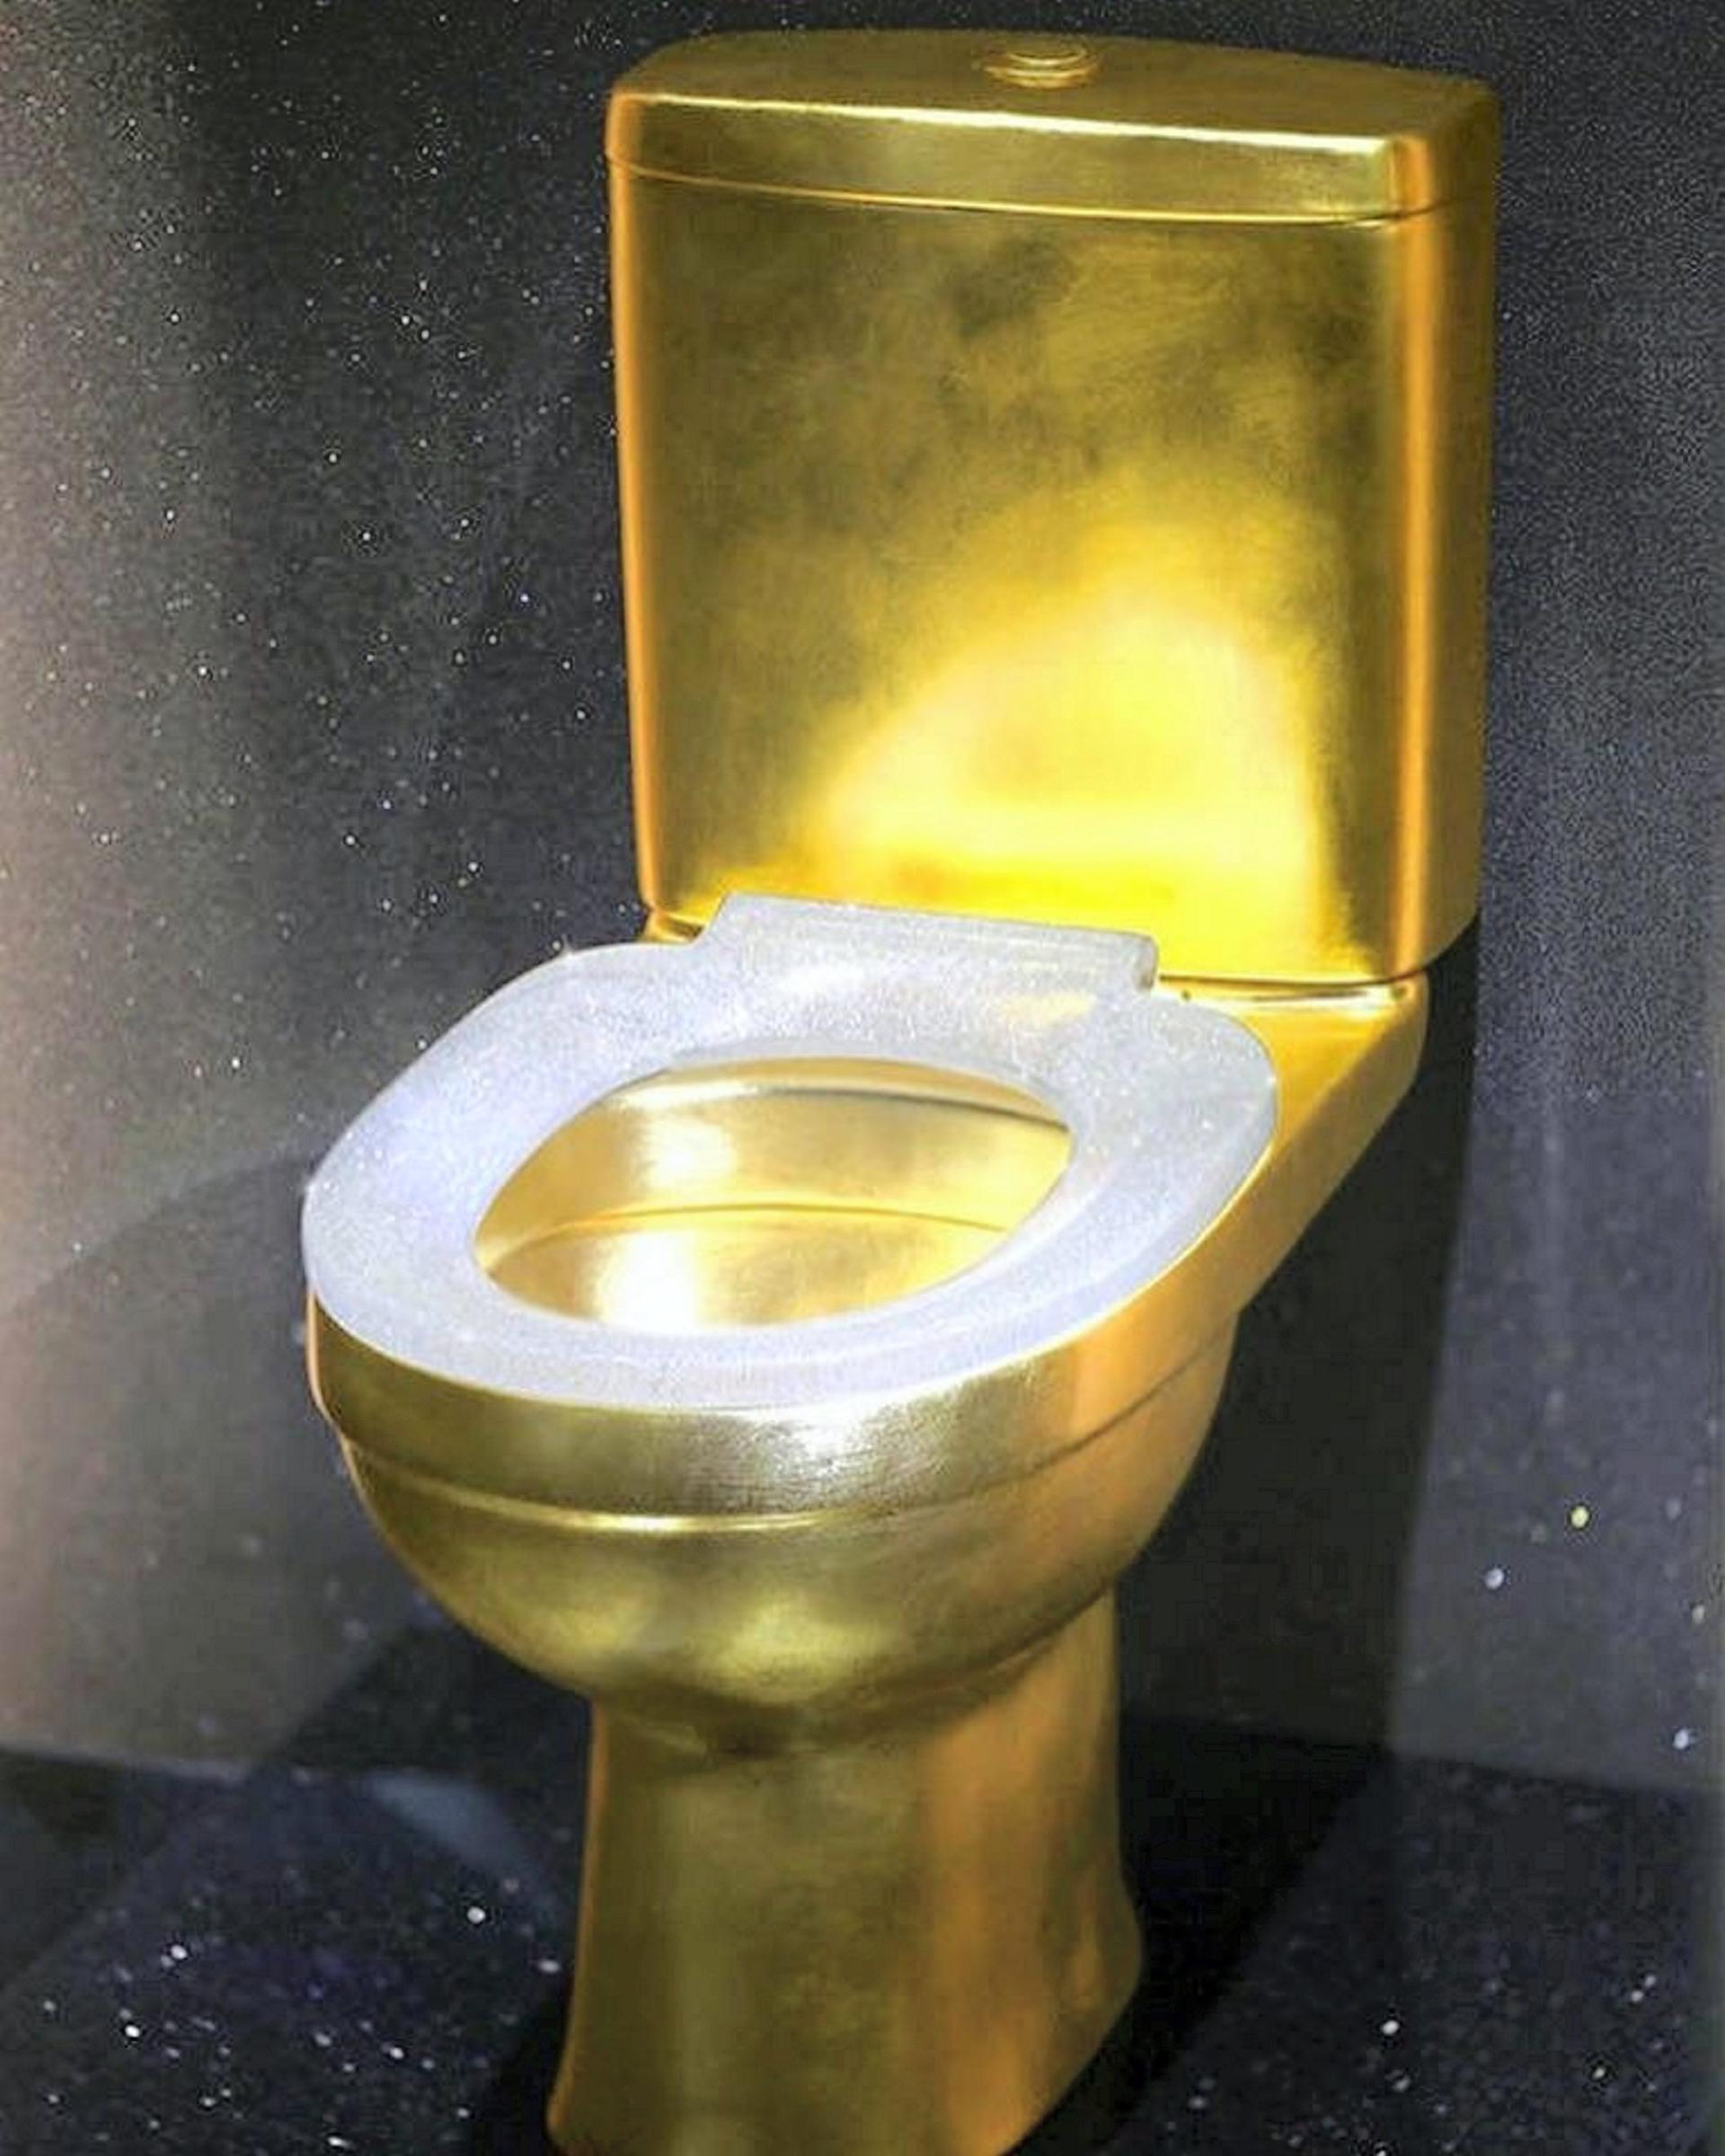 Japan's Diamond Studded Toilet Worth $100,000 